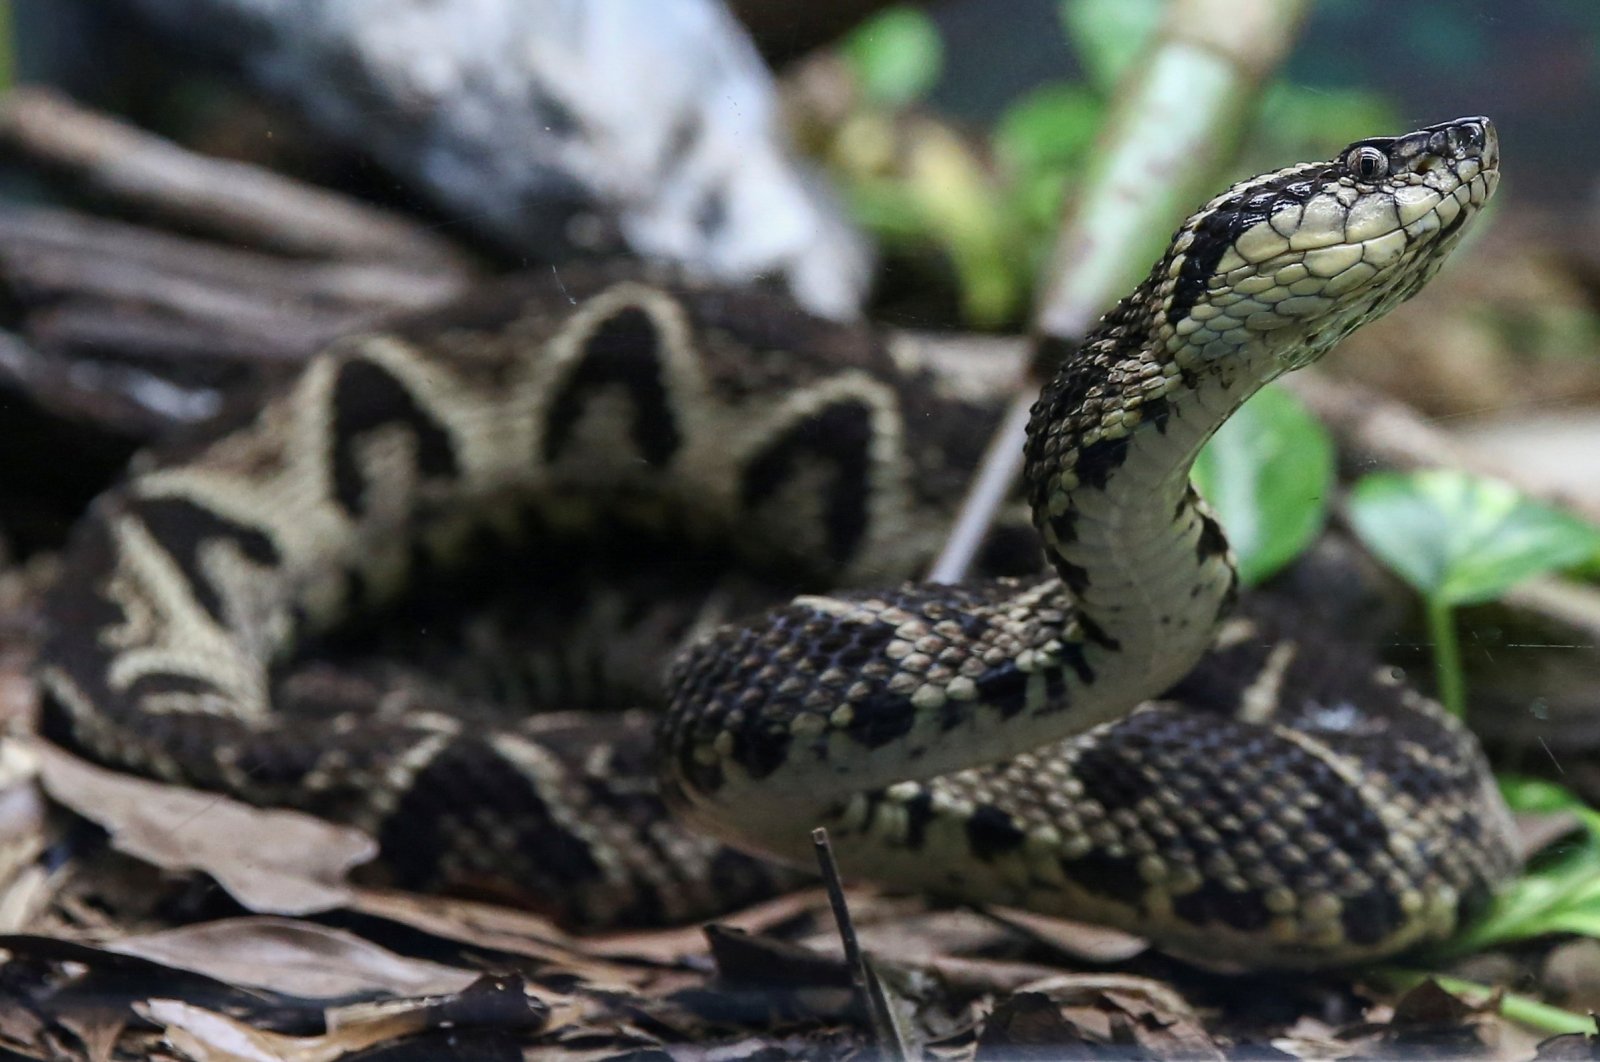 A jararacussu snake, whose venom is used in a study against the coronavirus disease, is seen at Butantan Institute in Sao Paulo, Brazil, Aug. 27, 2021. (Reuters Photo)